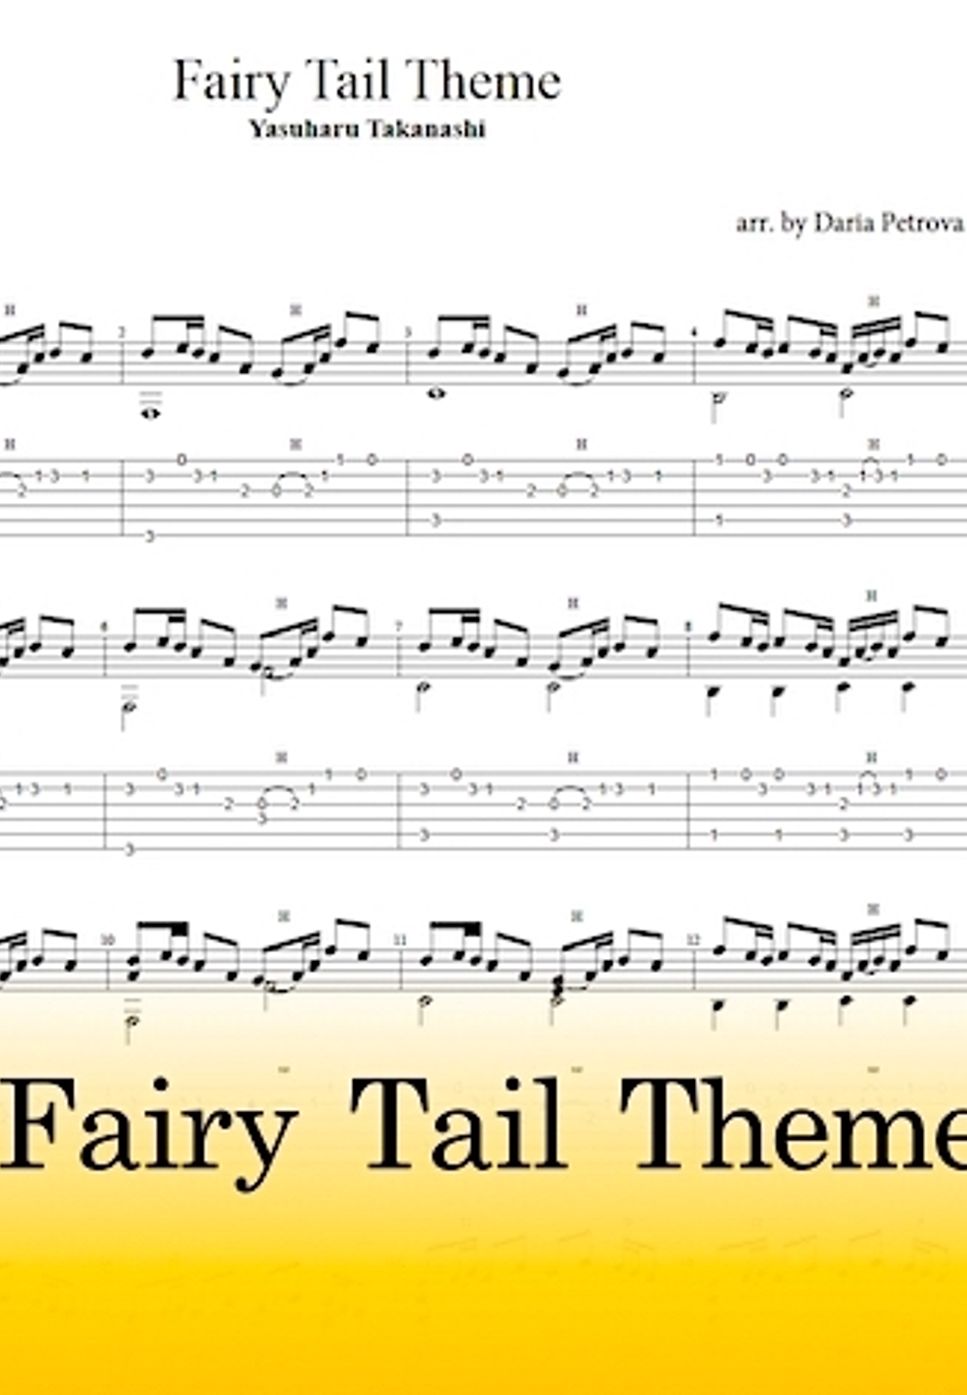 Yasuharu Takanashi - Fairy Tail Main Theme (Fingerstyle Guitar Arrangement, Drop D tuning, No Capo) by D.Petrova (Edora)